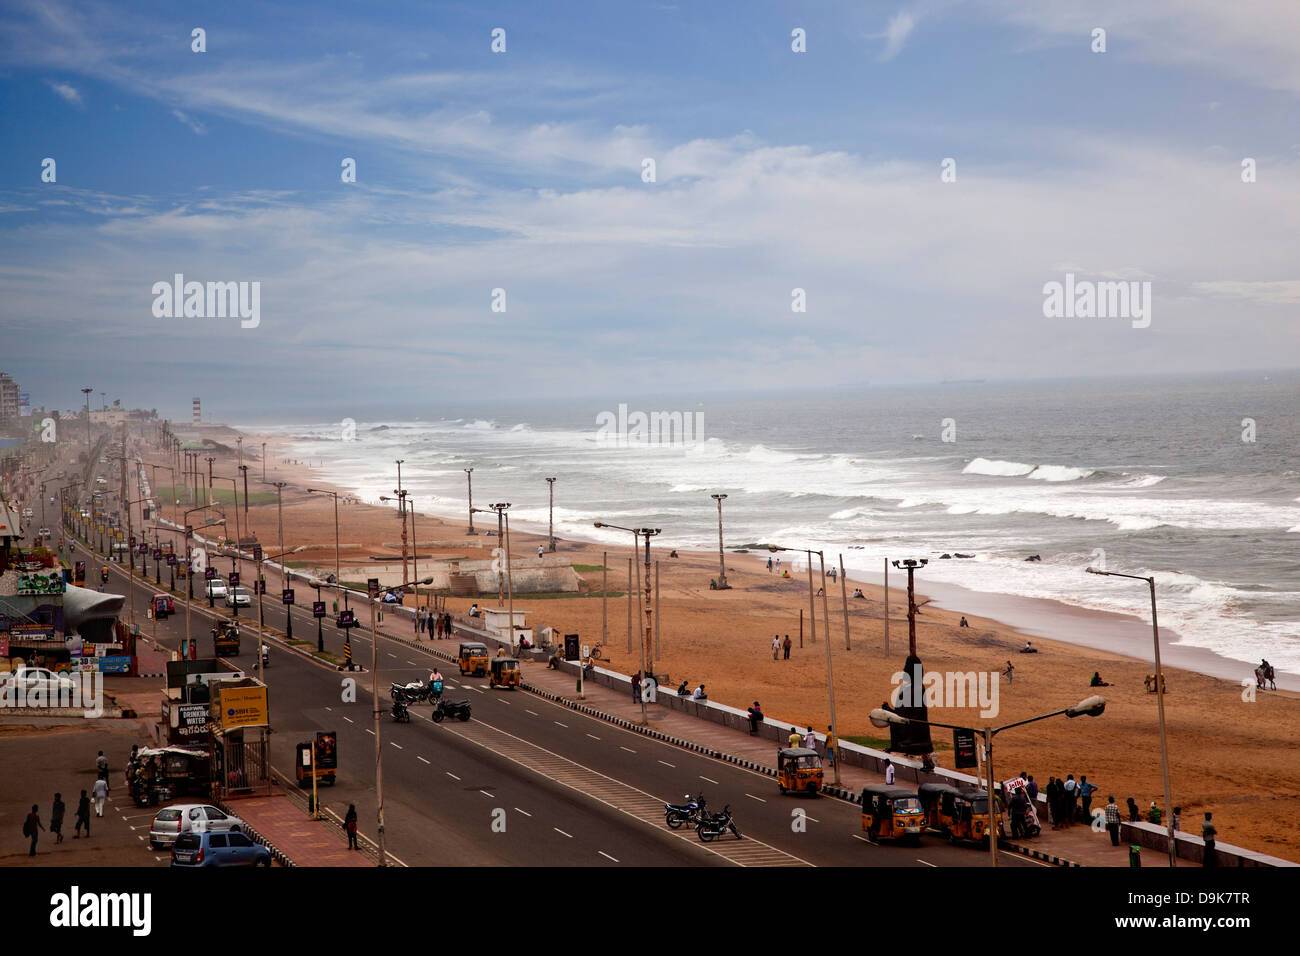 Traffic on the road along the beach, Visakhapatnam, Andhra Pradesh, India Stock Photo